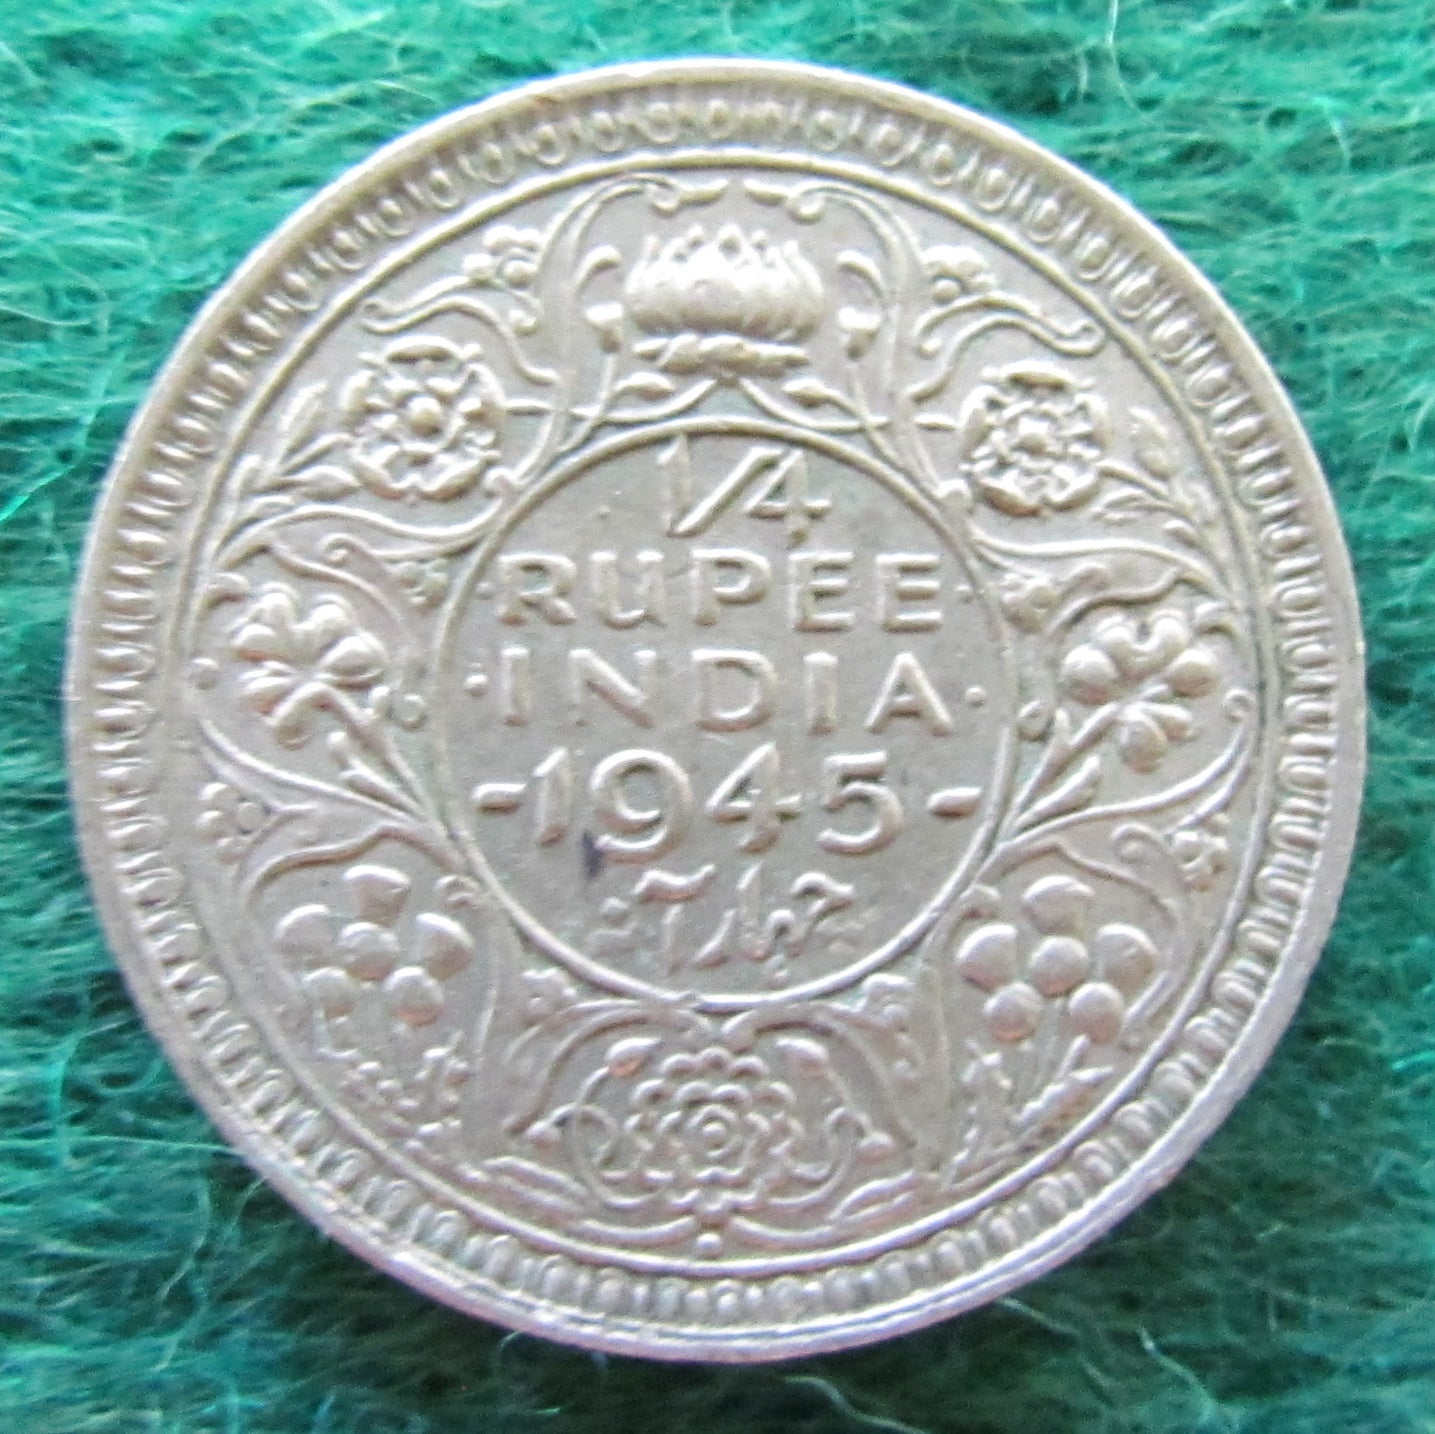 India 1945 Quarter 1/4 Rupee Coin - Circulated